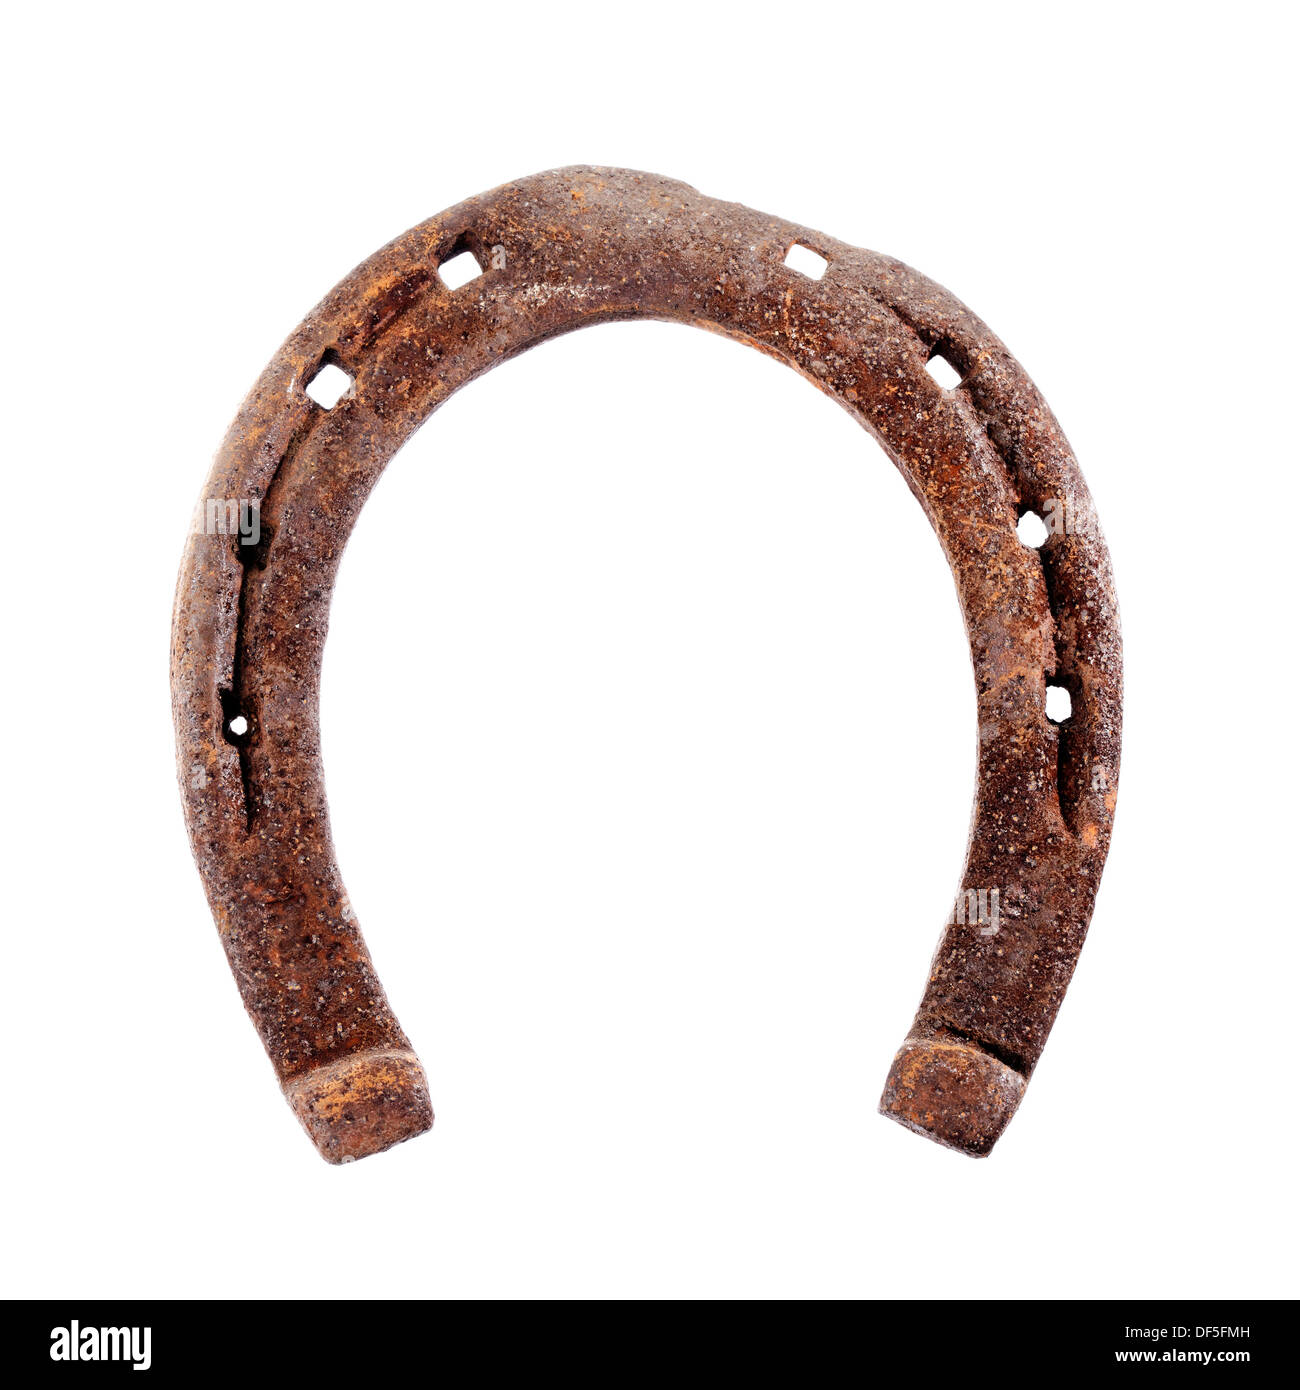 Old rusty and worn horseshoe isolated on white. Stock Photo